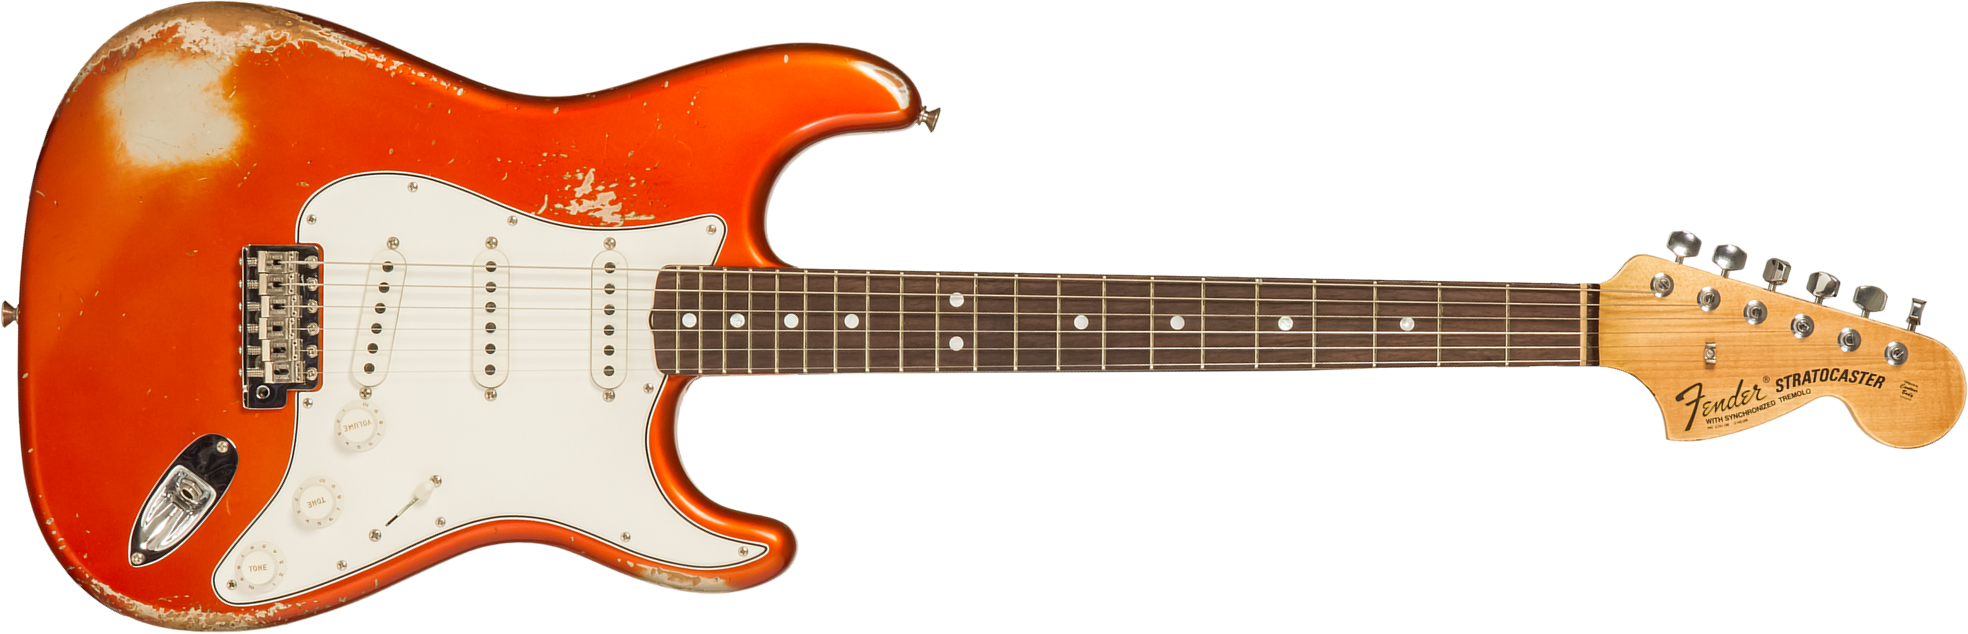 Fender Custom Shop Strat 1969 3s Trem Rw #r132166 - Heavy Relic Candy Tangerine - Elektrische gitaar in Str-vorm - Main picture